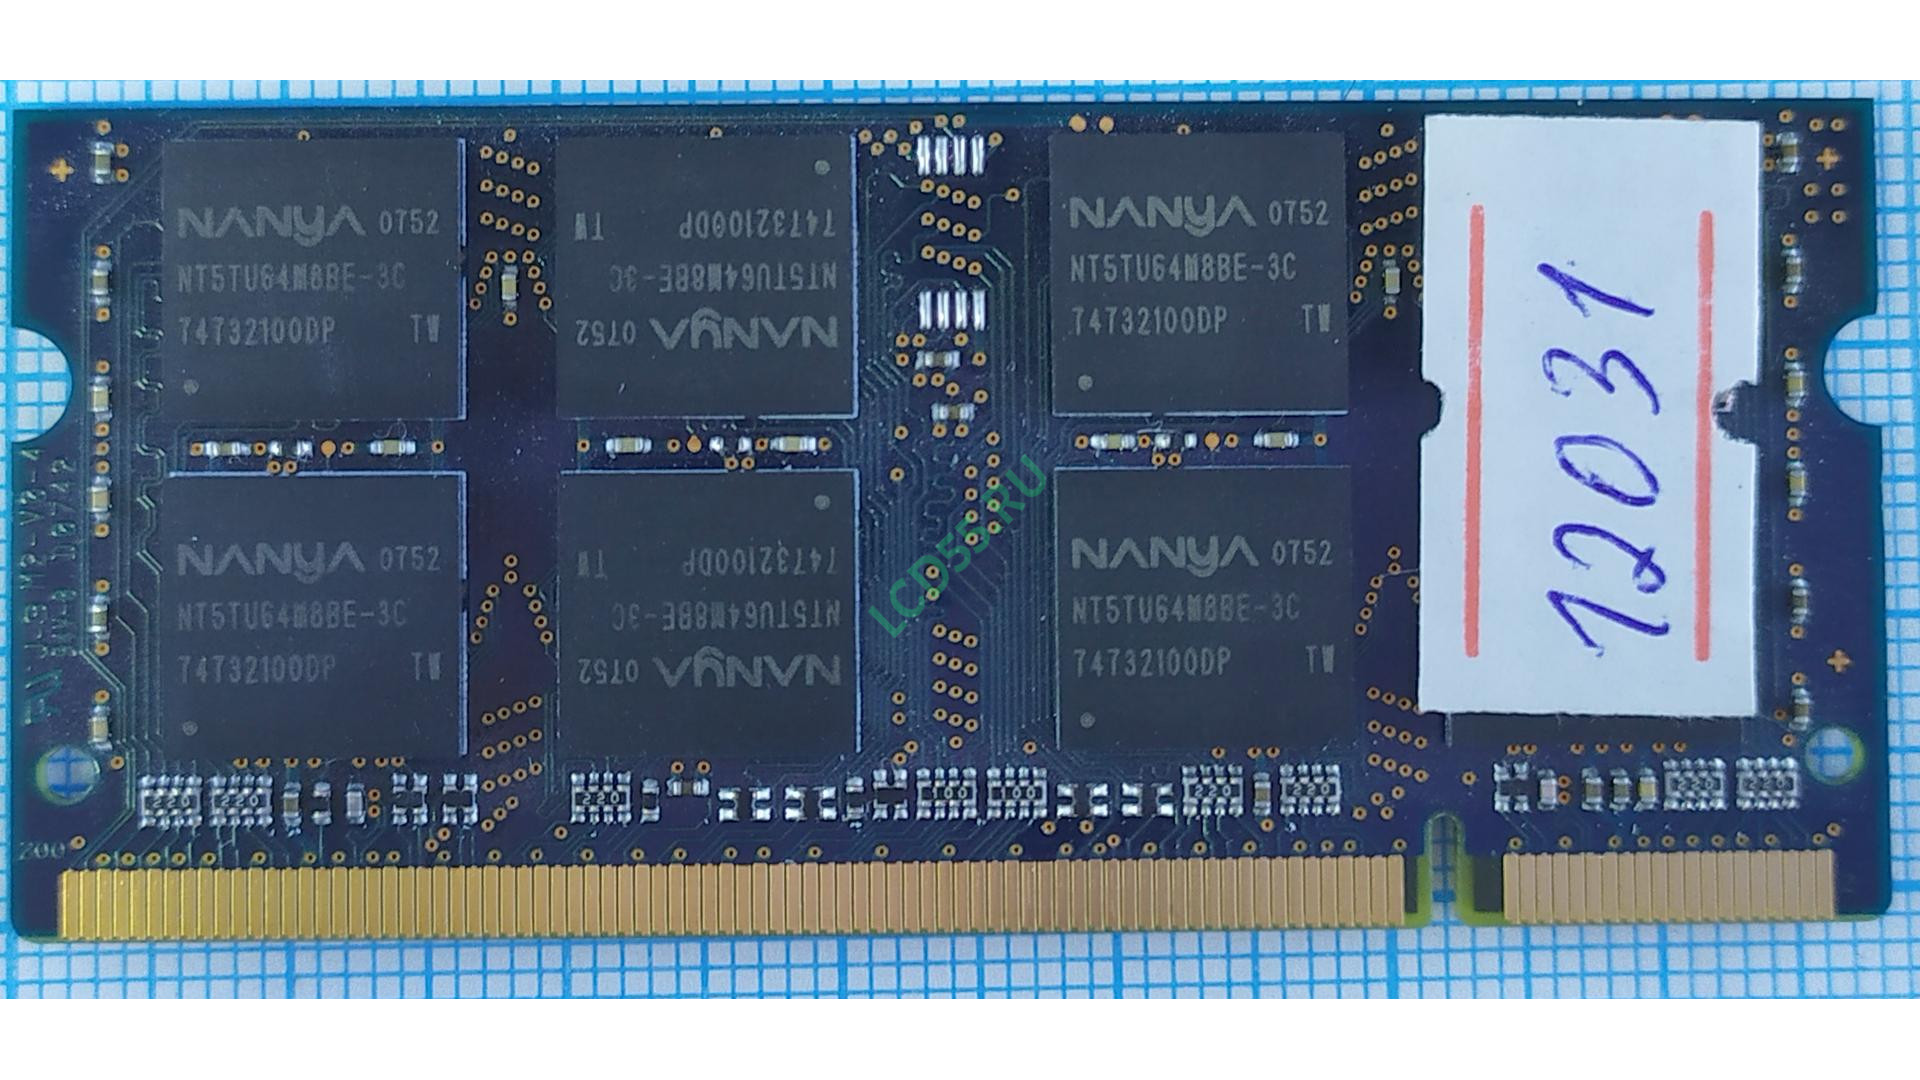 Nanya DDR-II 667Mhz SODIMM 1Gb <PC2-5300>